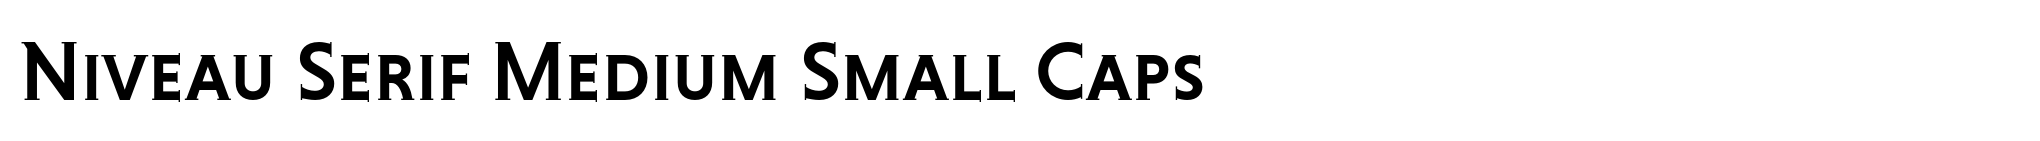 Niveau Serif Medium Small Caps image